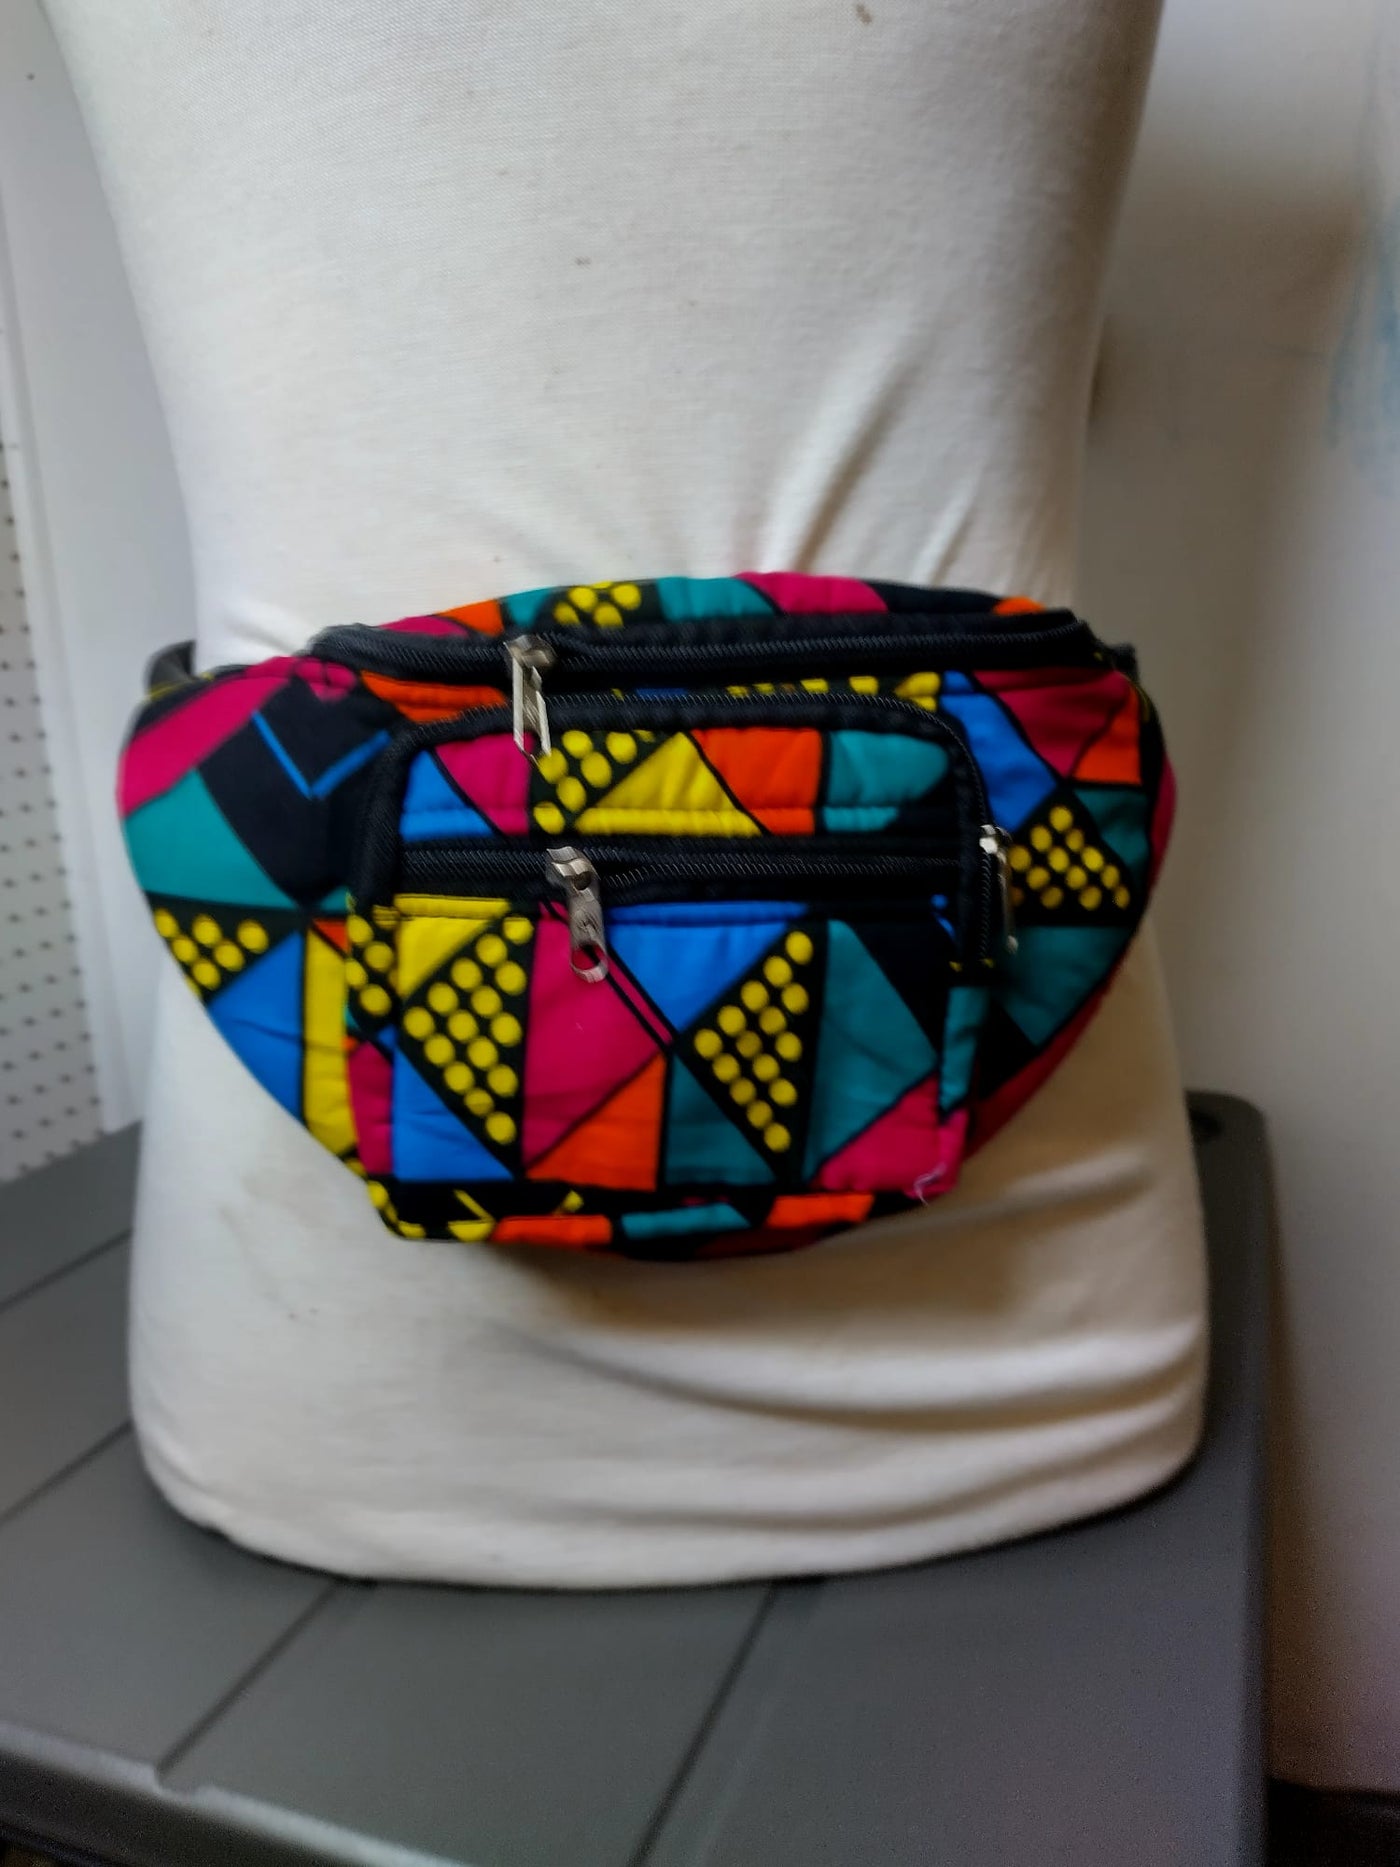 African / Kente Fabric Fannie Pack